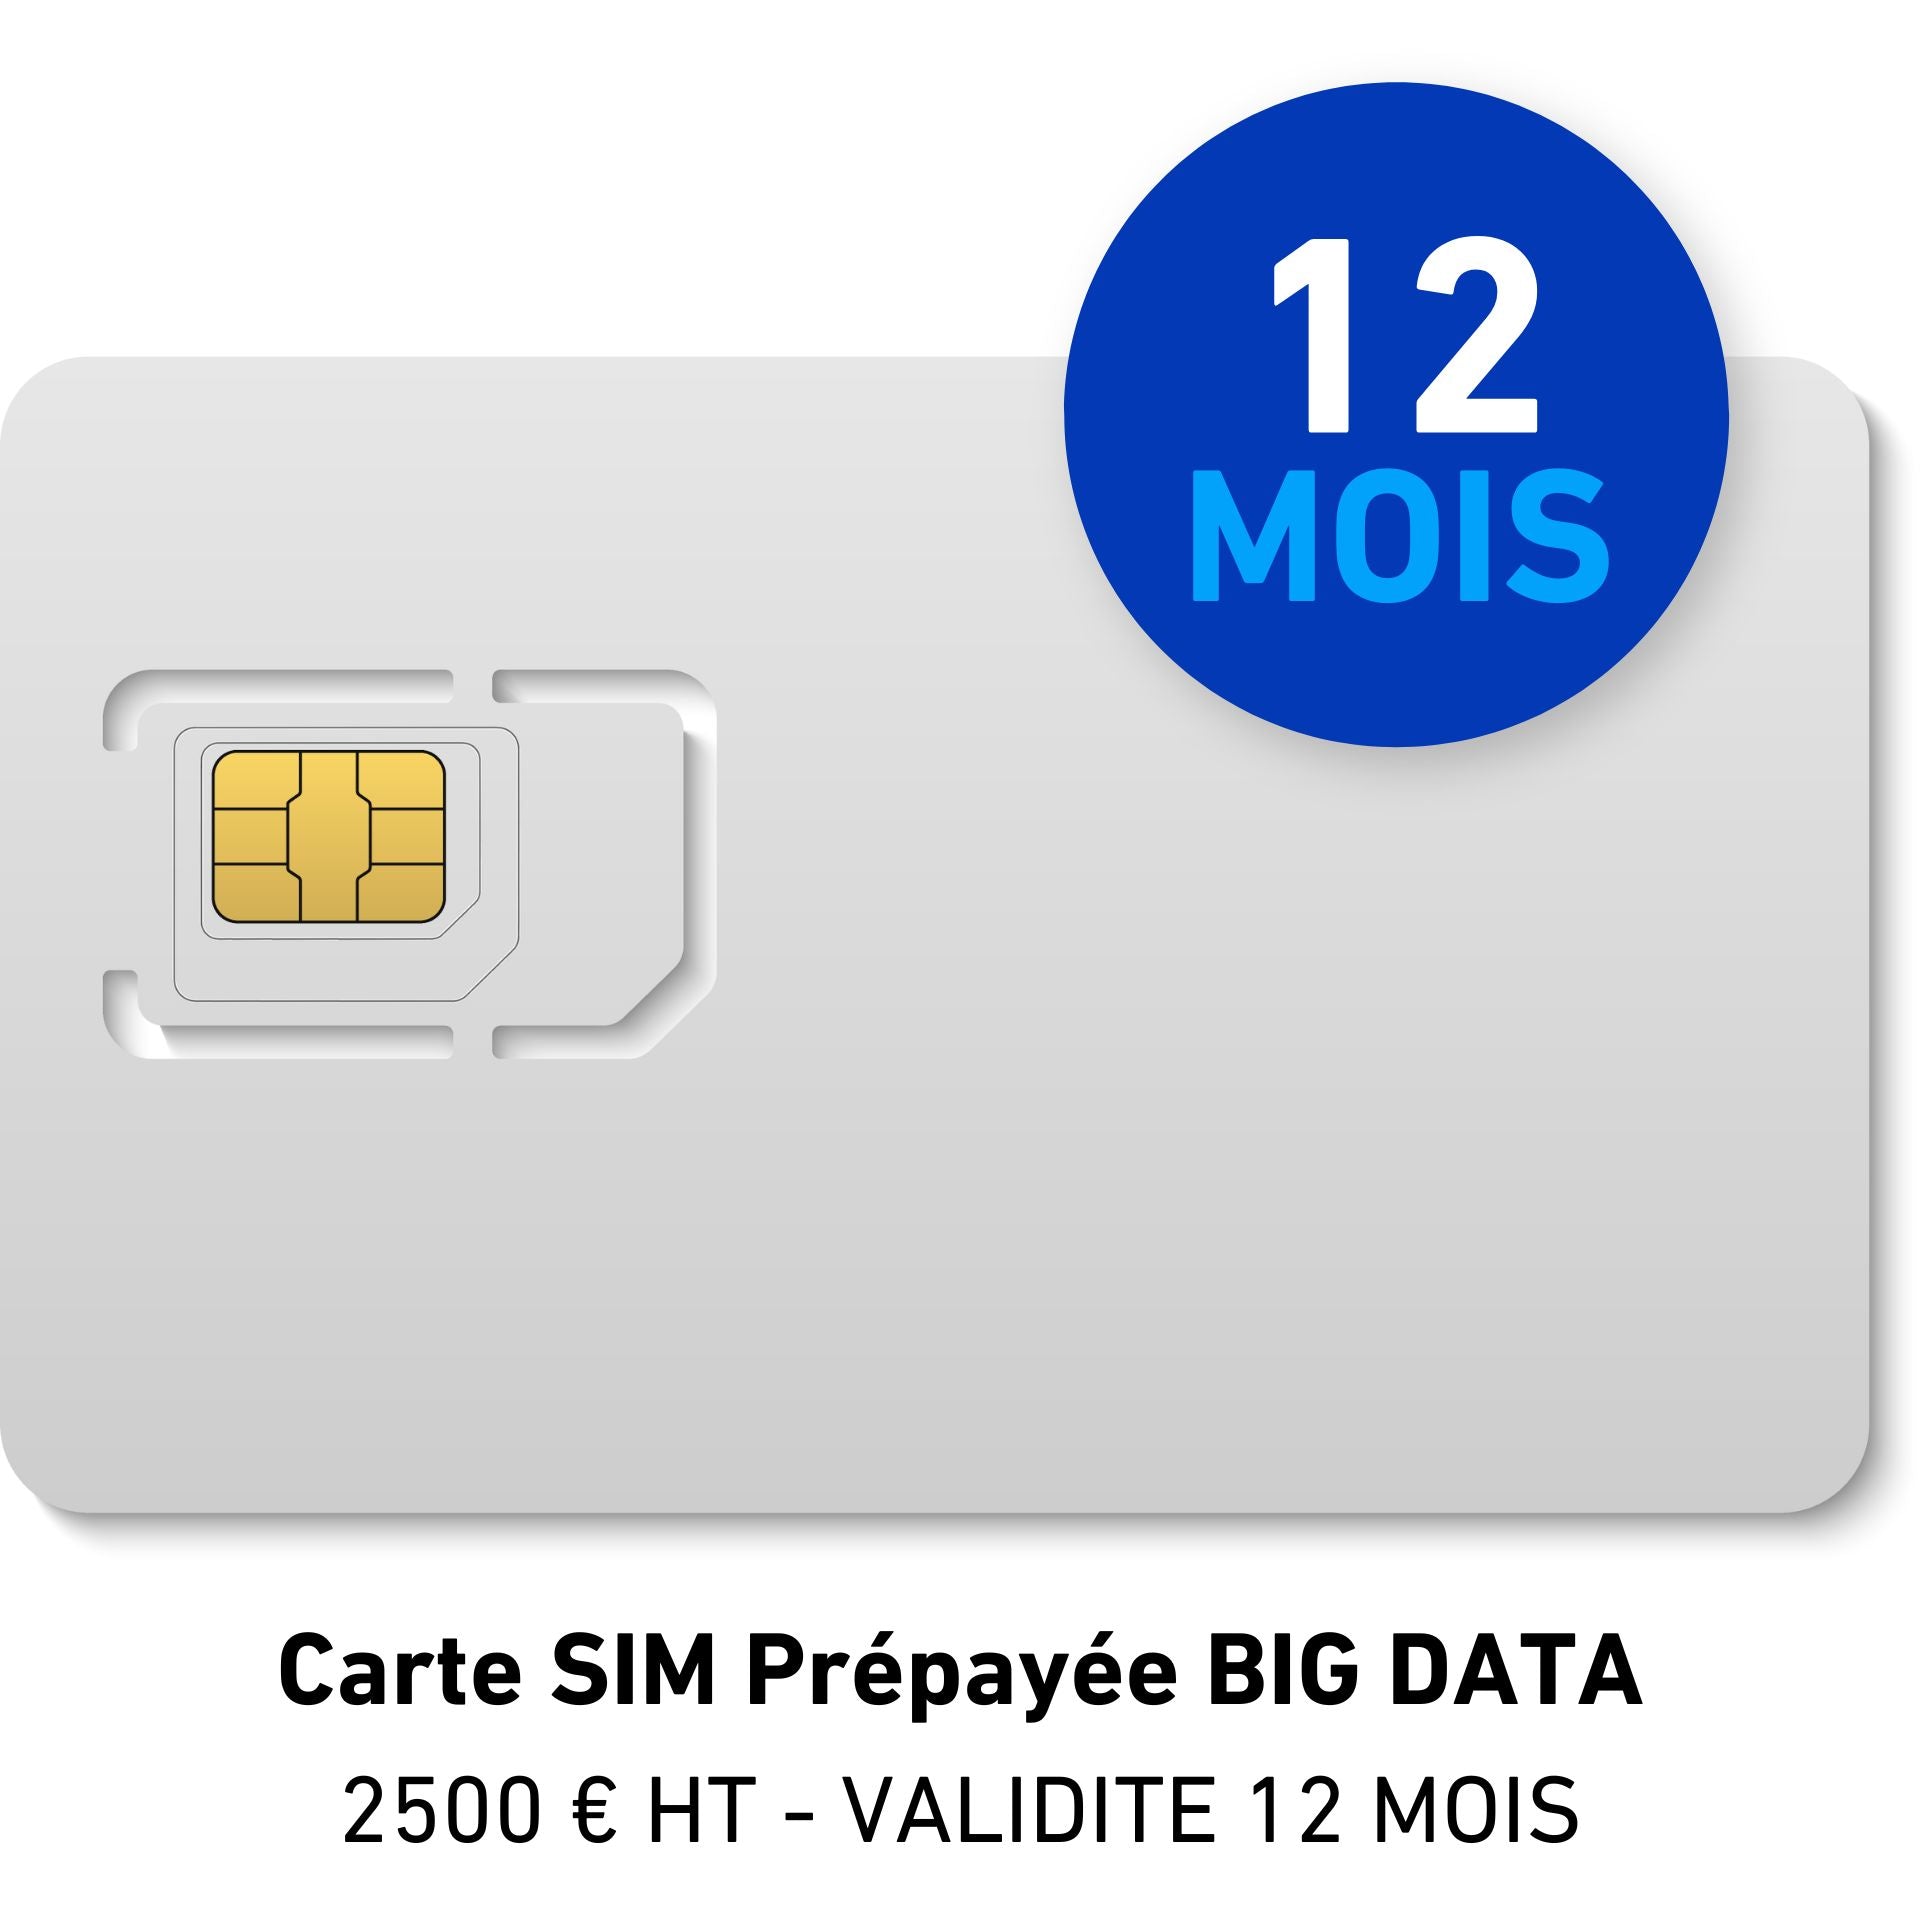 BIG DATA prepaid SIM card 2500 € HT - VALIDITY 12 MONTHS